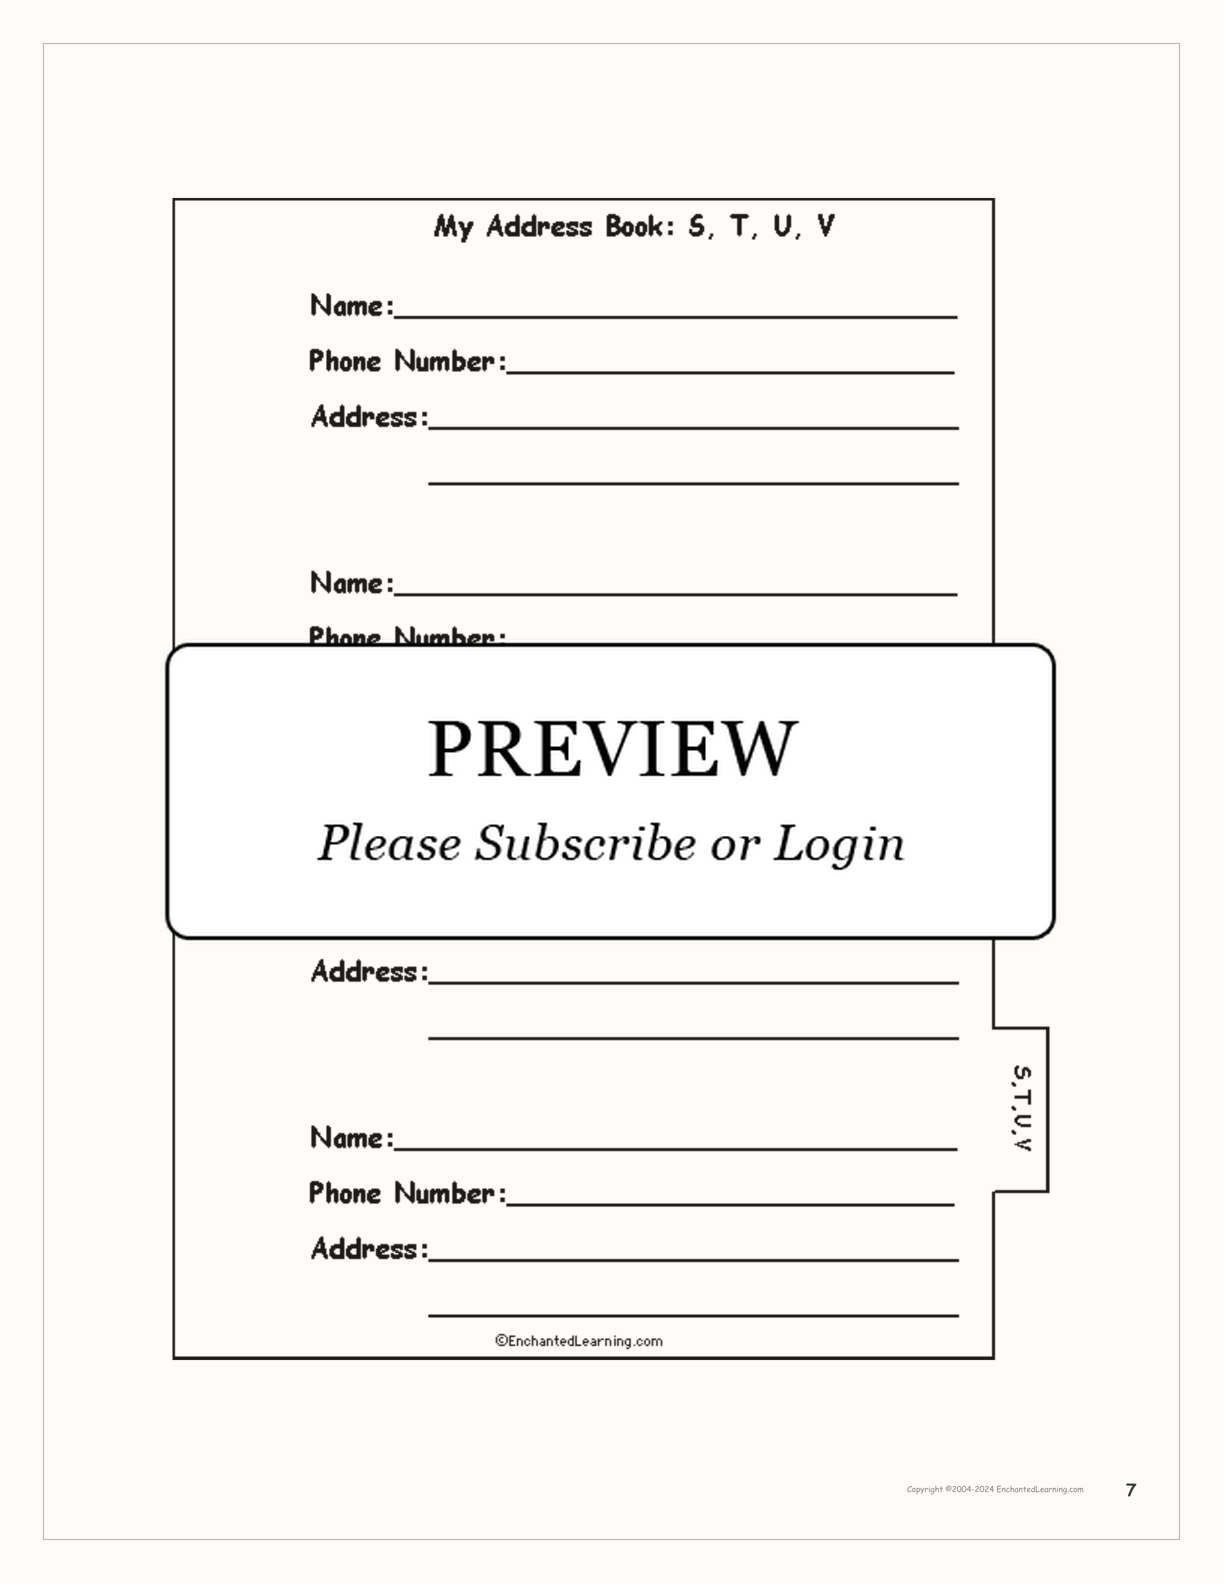 My Address Book interactive printout page 7